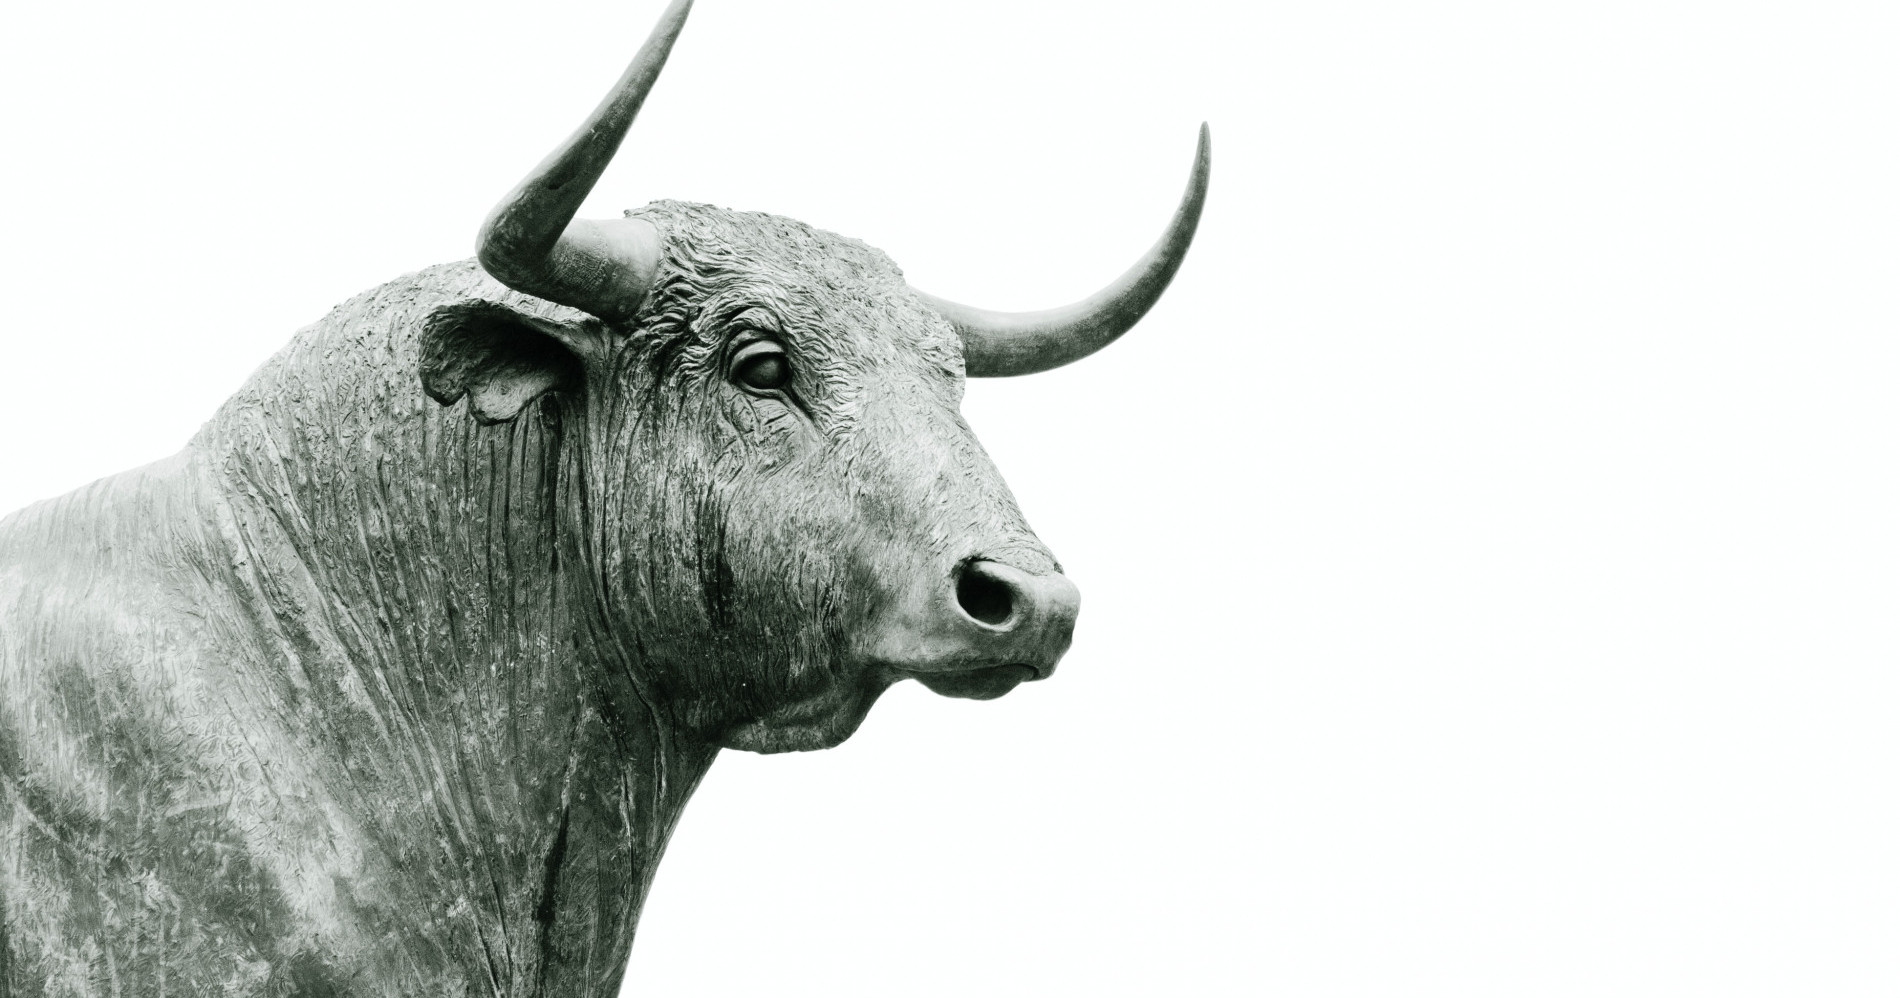 bull statue(unsplash)